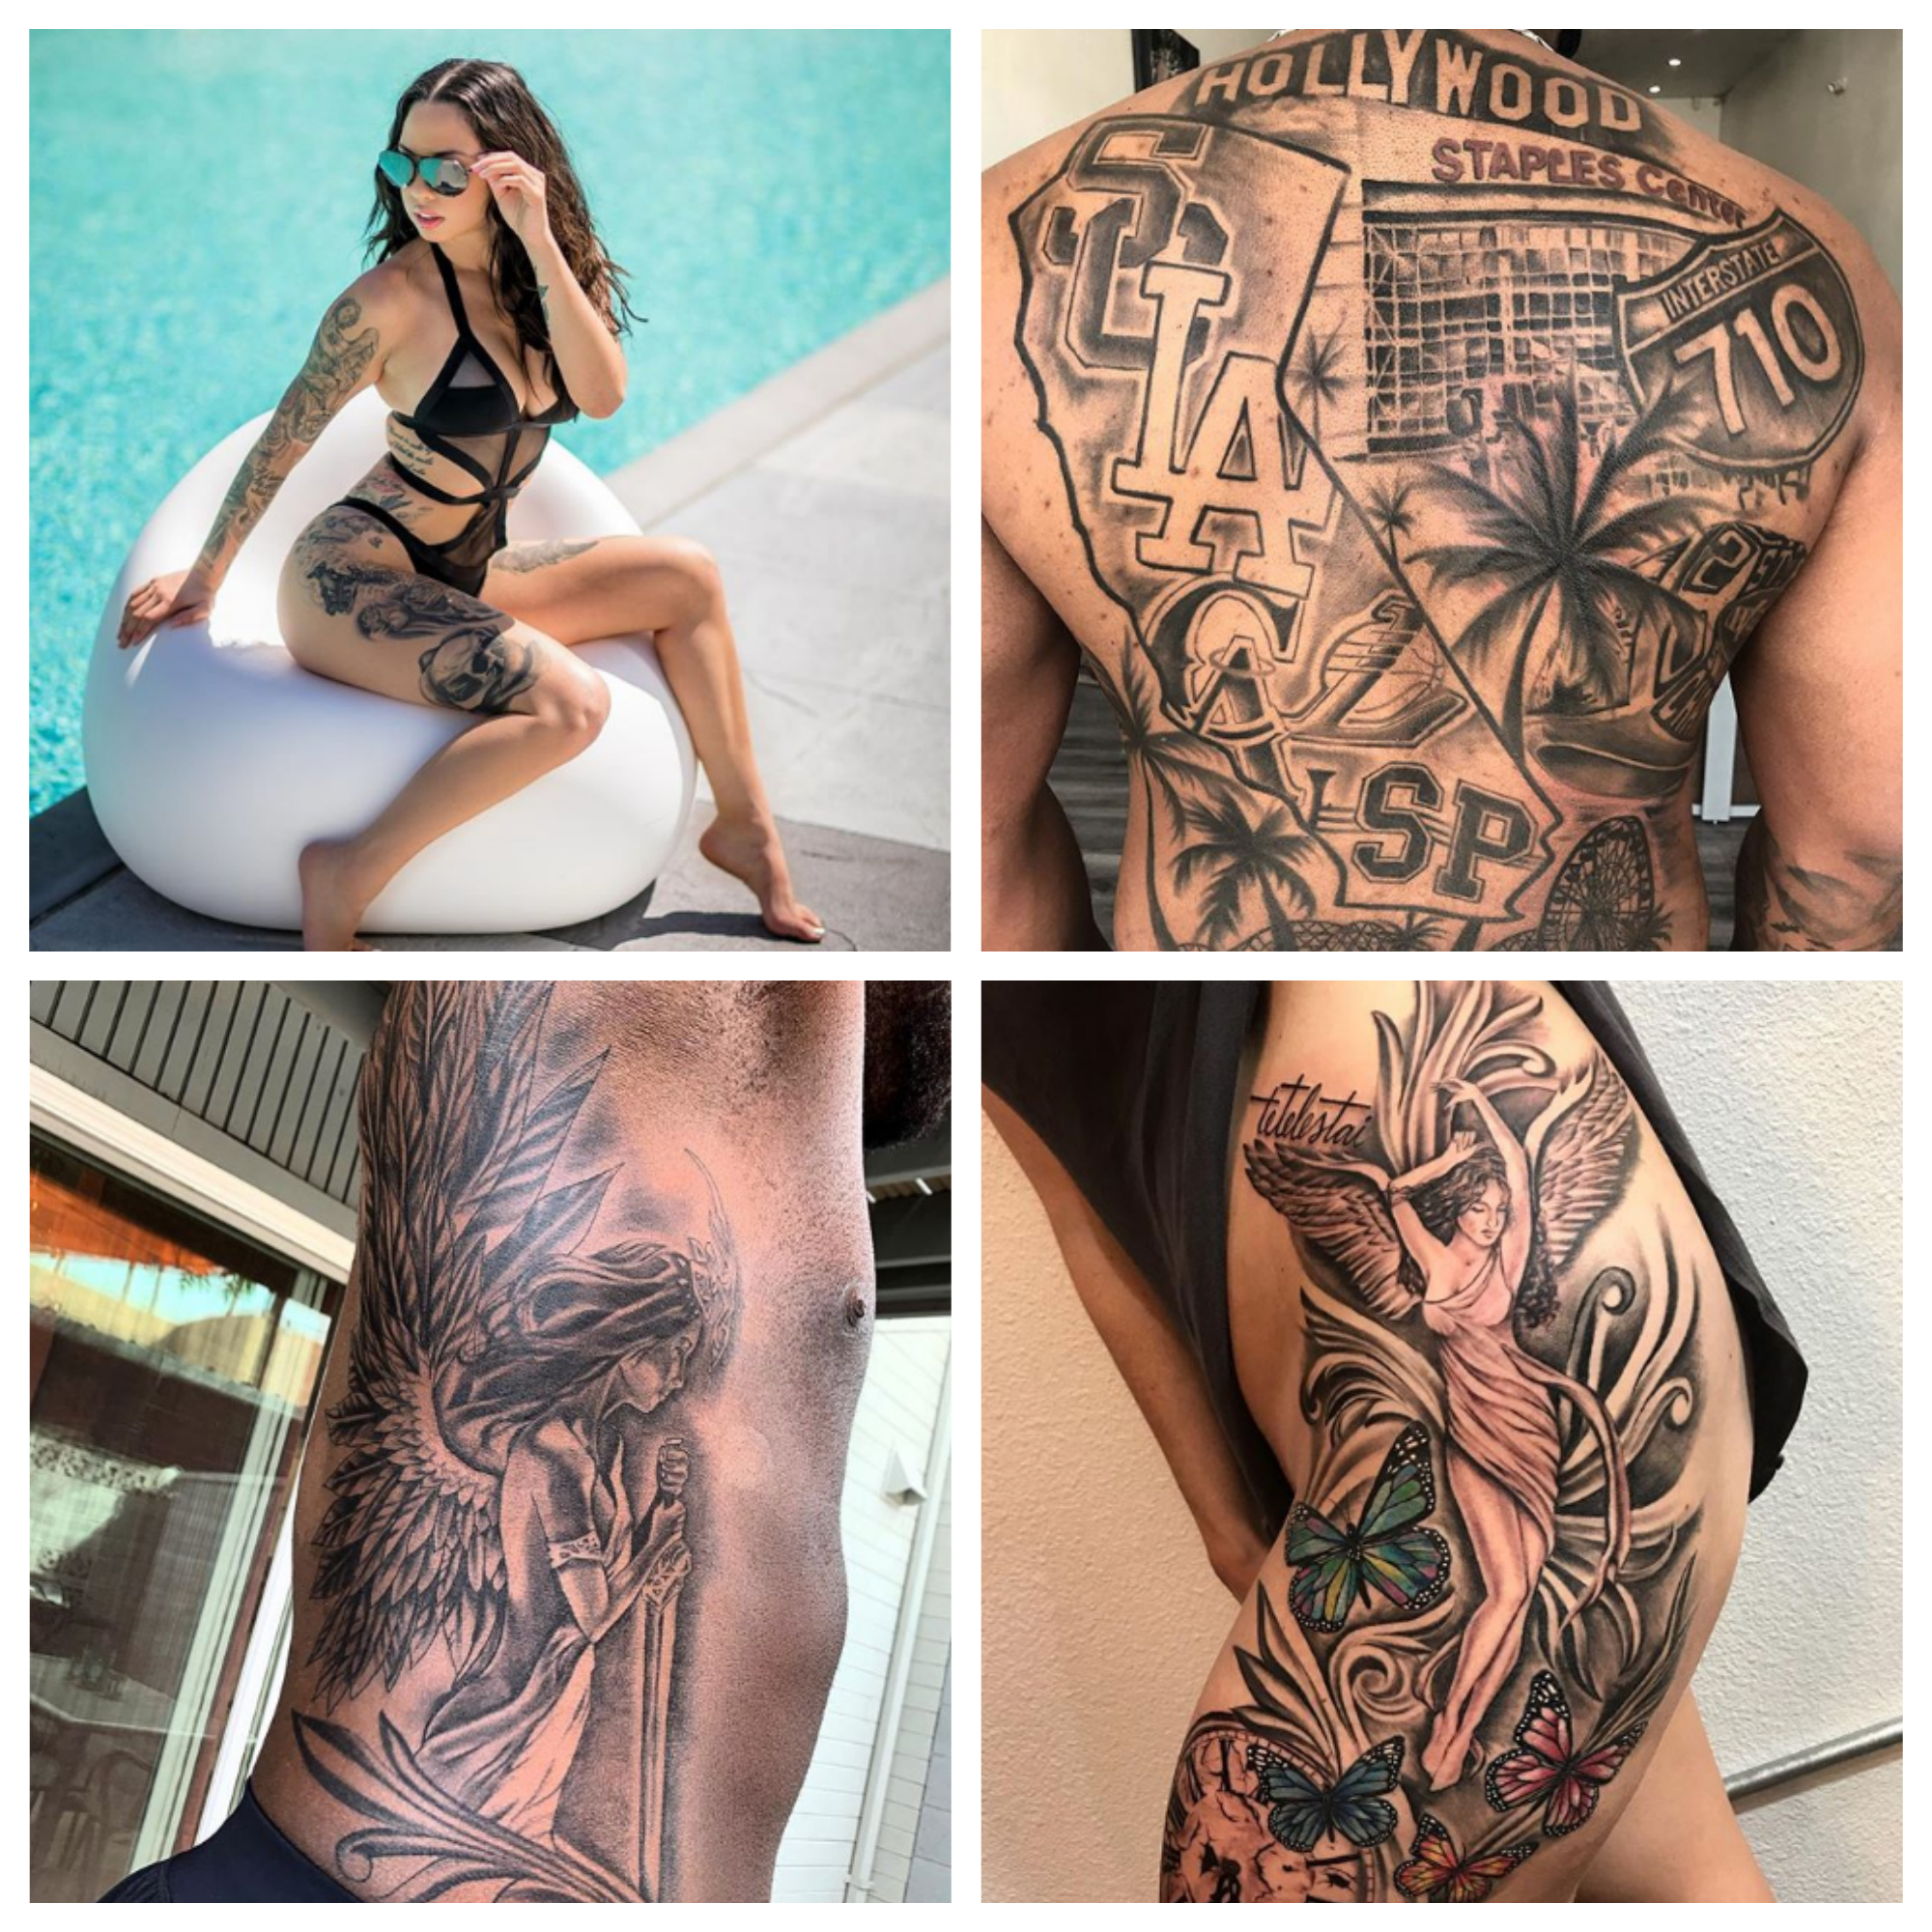 Katrina Jackson — Tattoo Piece I did for Aldon Smith!